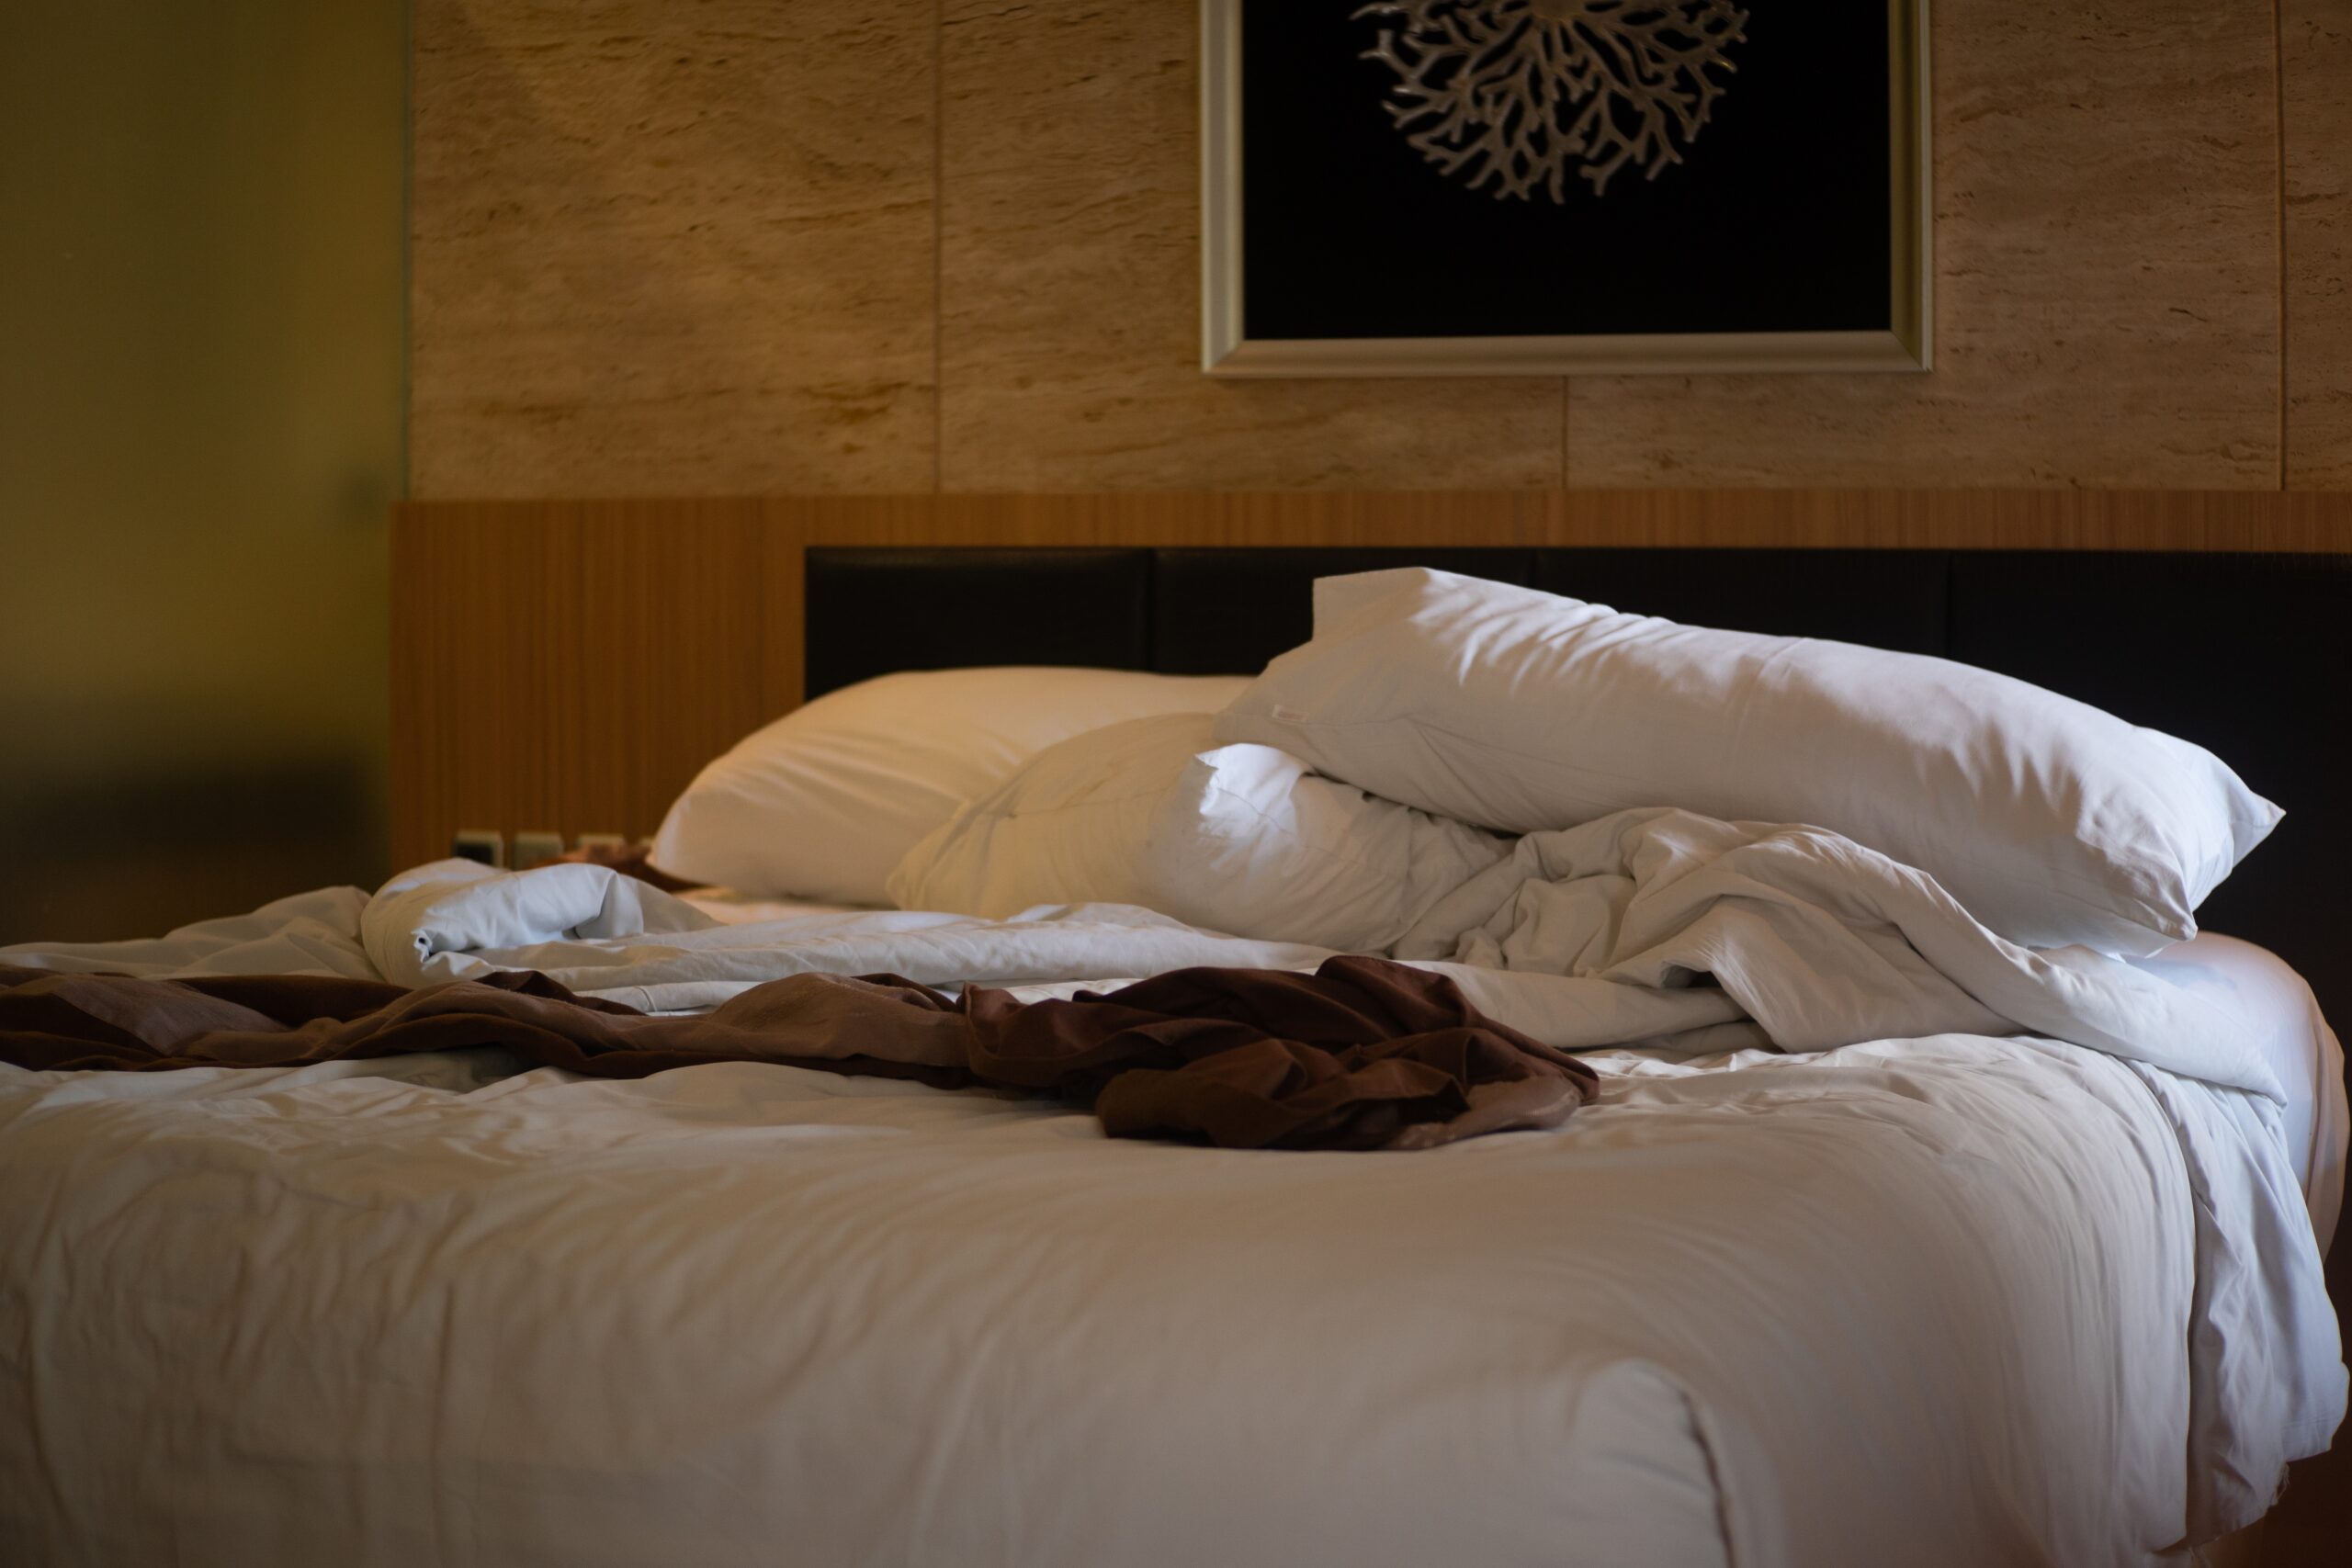 Sleep 2 - Bedroom environment